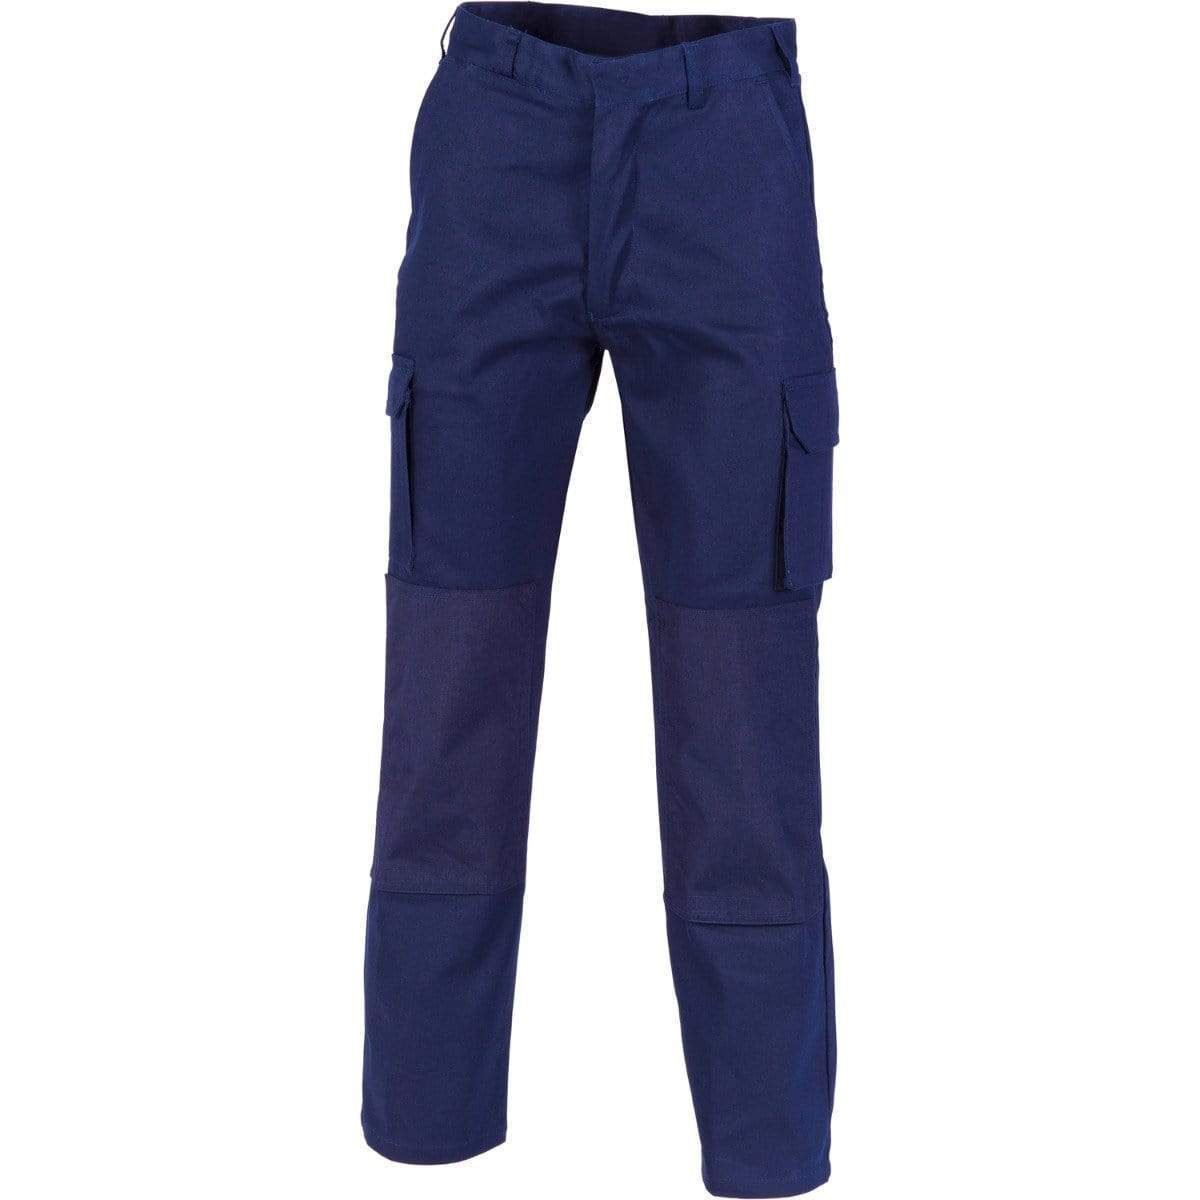 Dnc Workwear Cordura Knee Patch Cargo Pants Without Pads - 3324 Work Wear DNC Workwear Navy 87R 